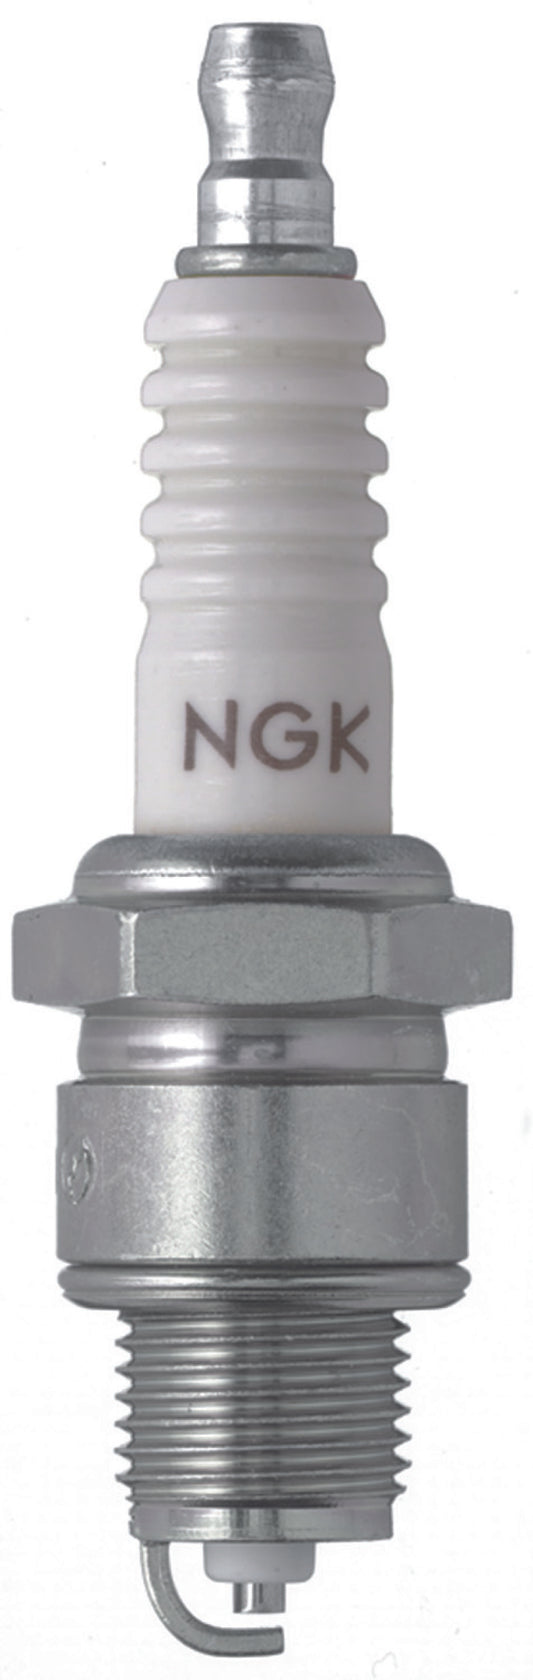 NGK Copper Core Spark Plug Box of 4 (BP6HS)